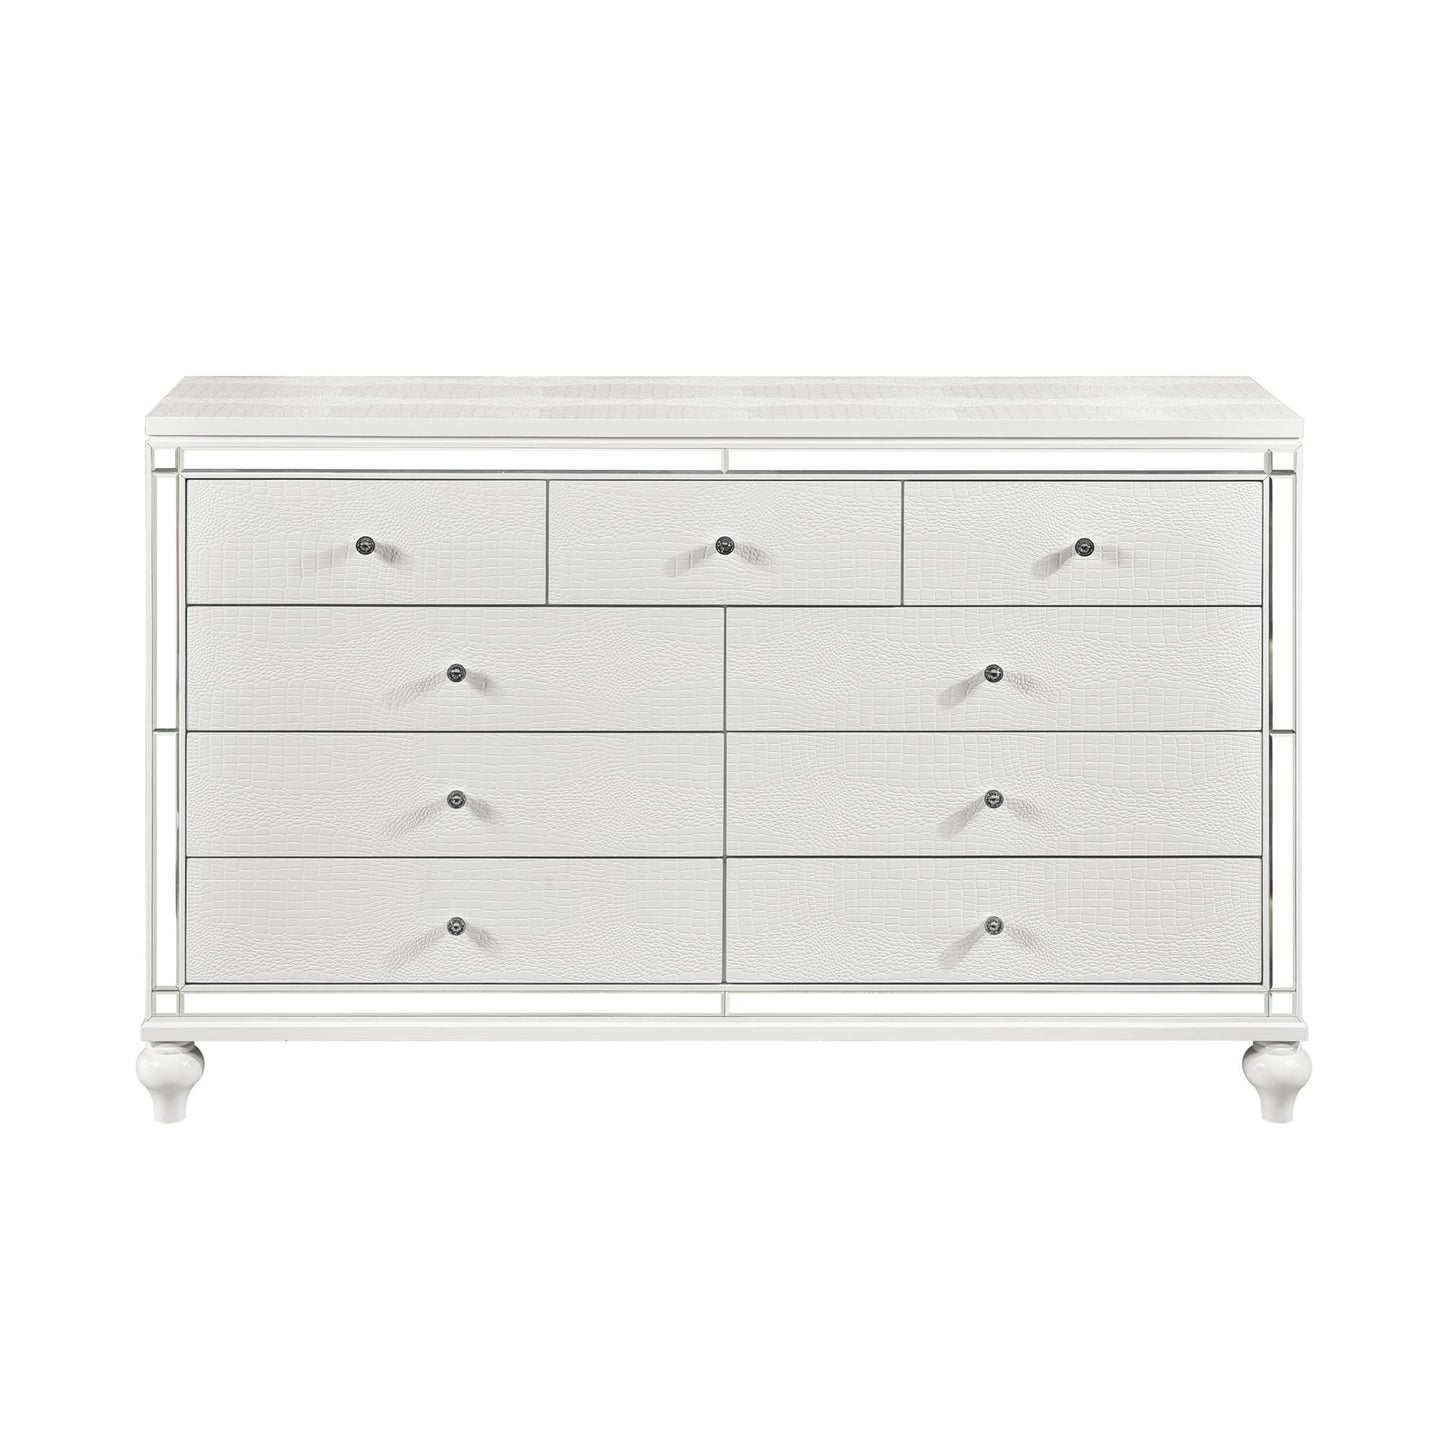 glamorous metallic white finish dresser of 9x drawers faux crystal knobs modern bedroom furniture